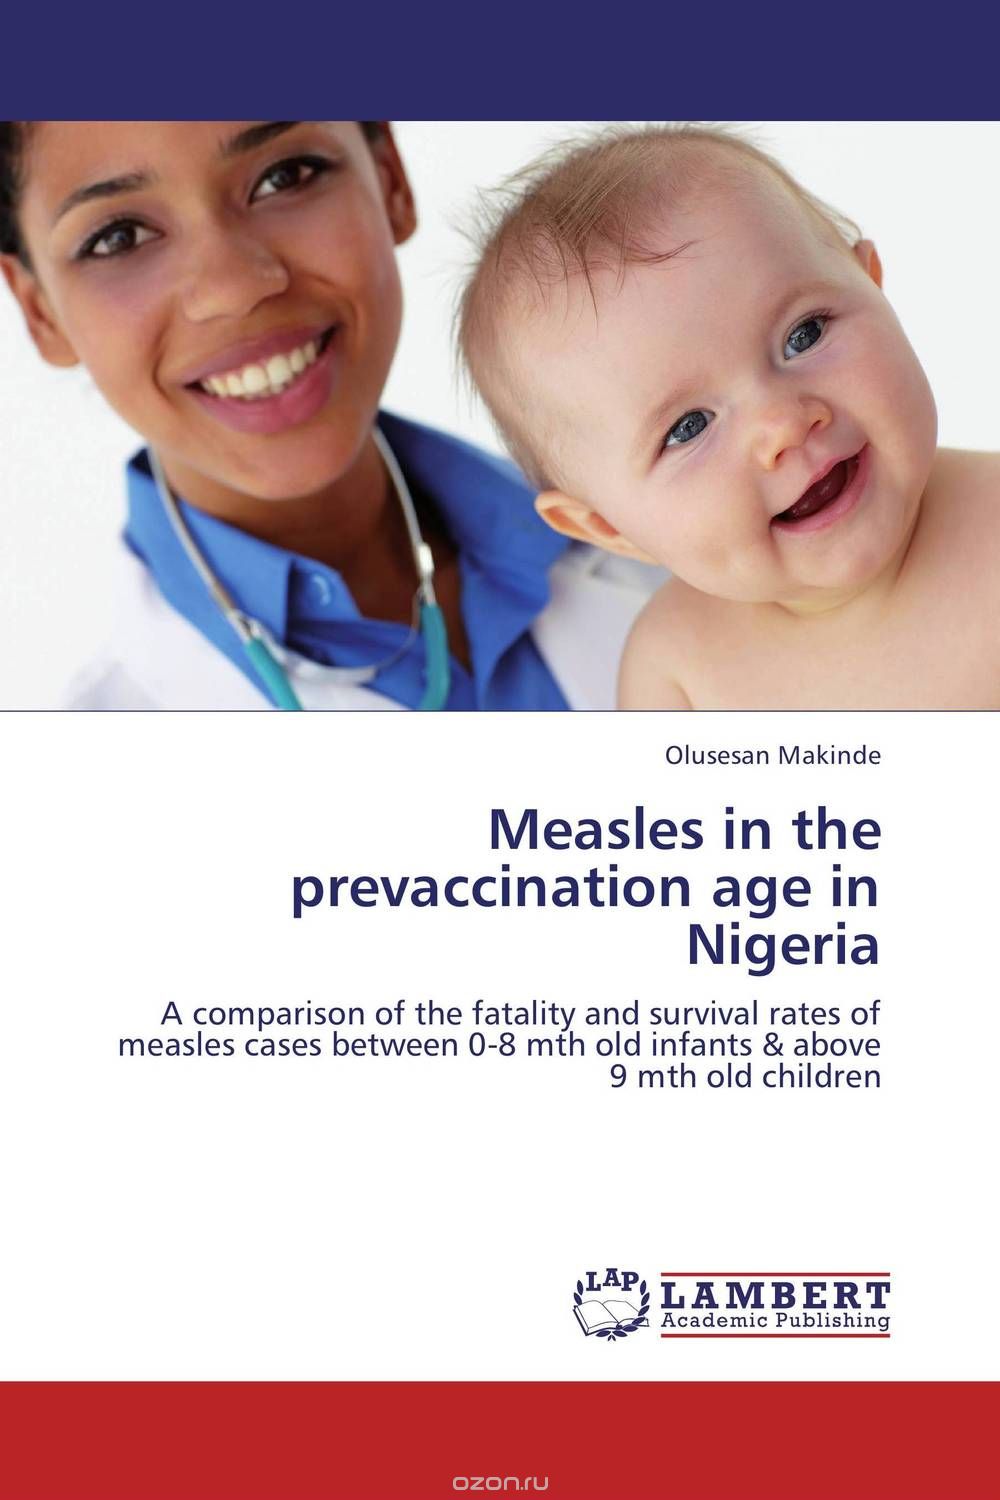 Скачать книгу "Measles in the prevaccination age in Nigeria"